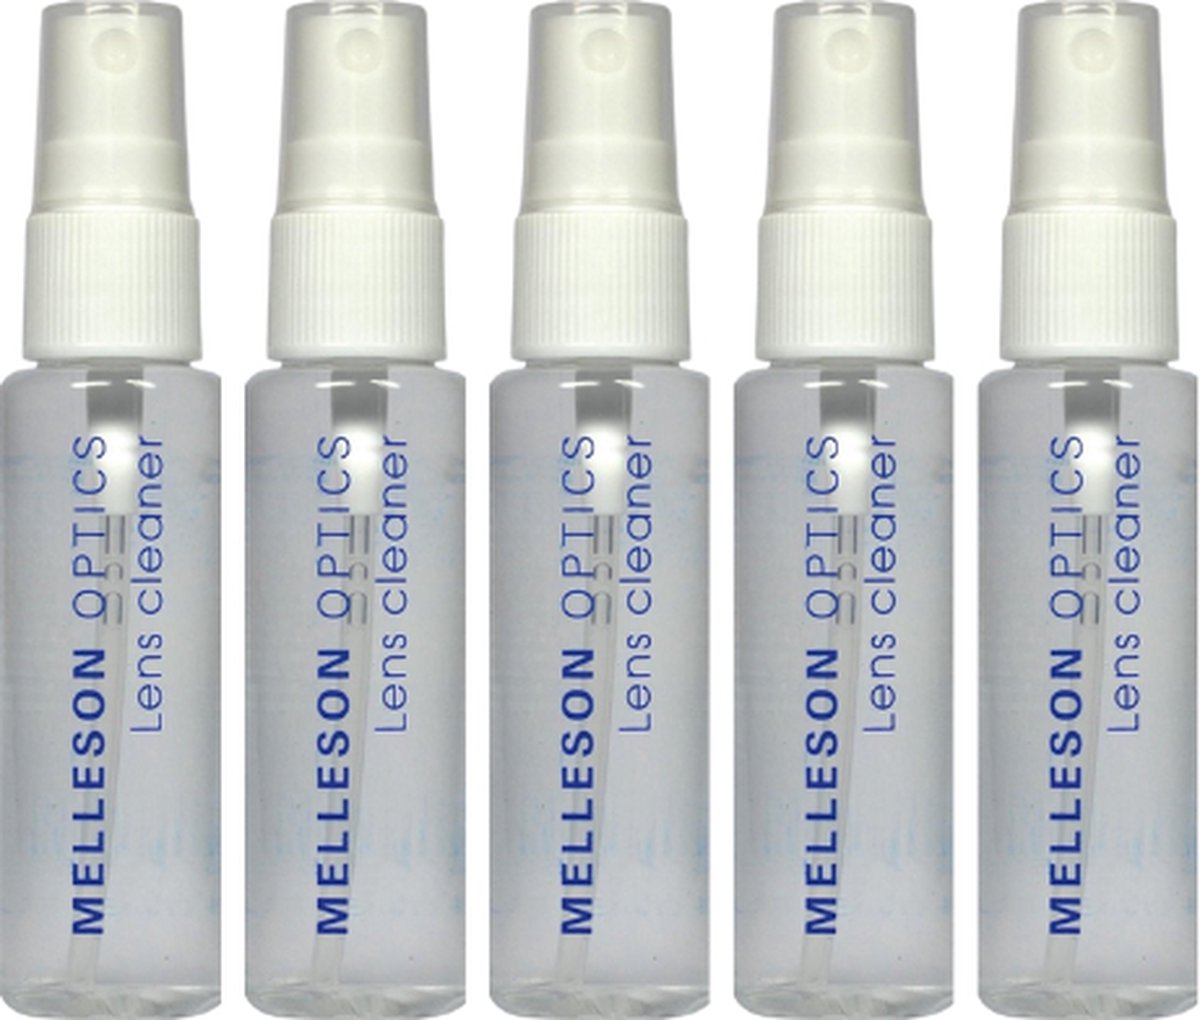 Melleson Optics brilspray 33 ml - anti condens - anti fog - zonder alcohol - 5 stuks